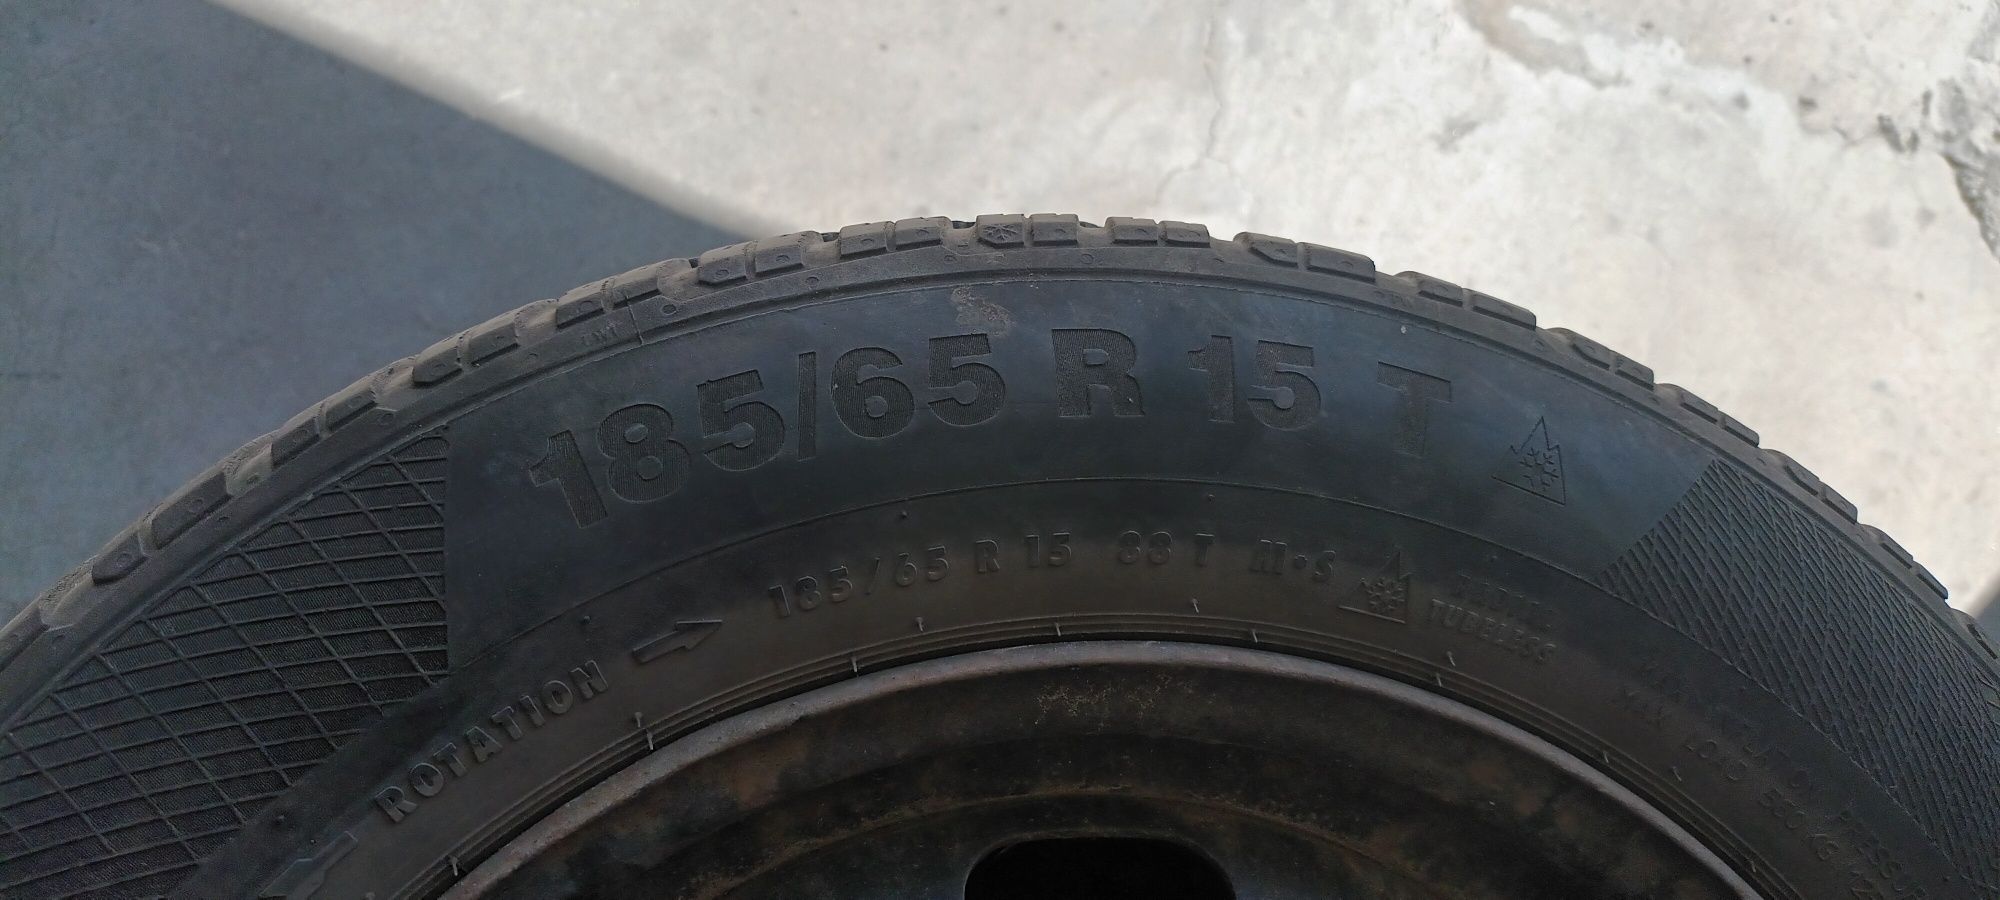 Зимни гуми с джанти 185 65 15